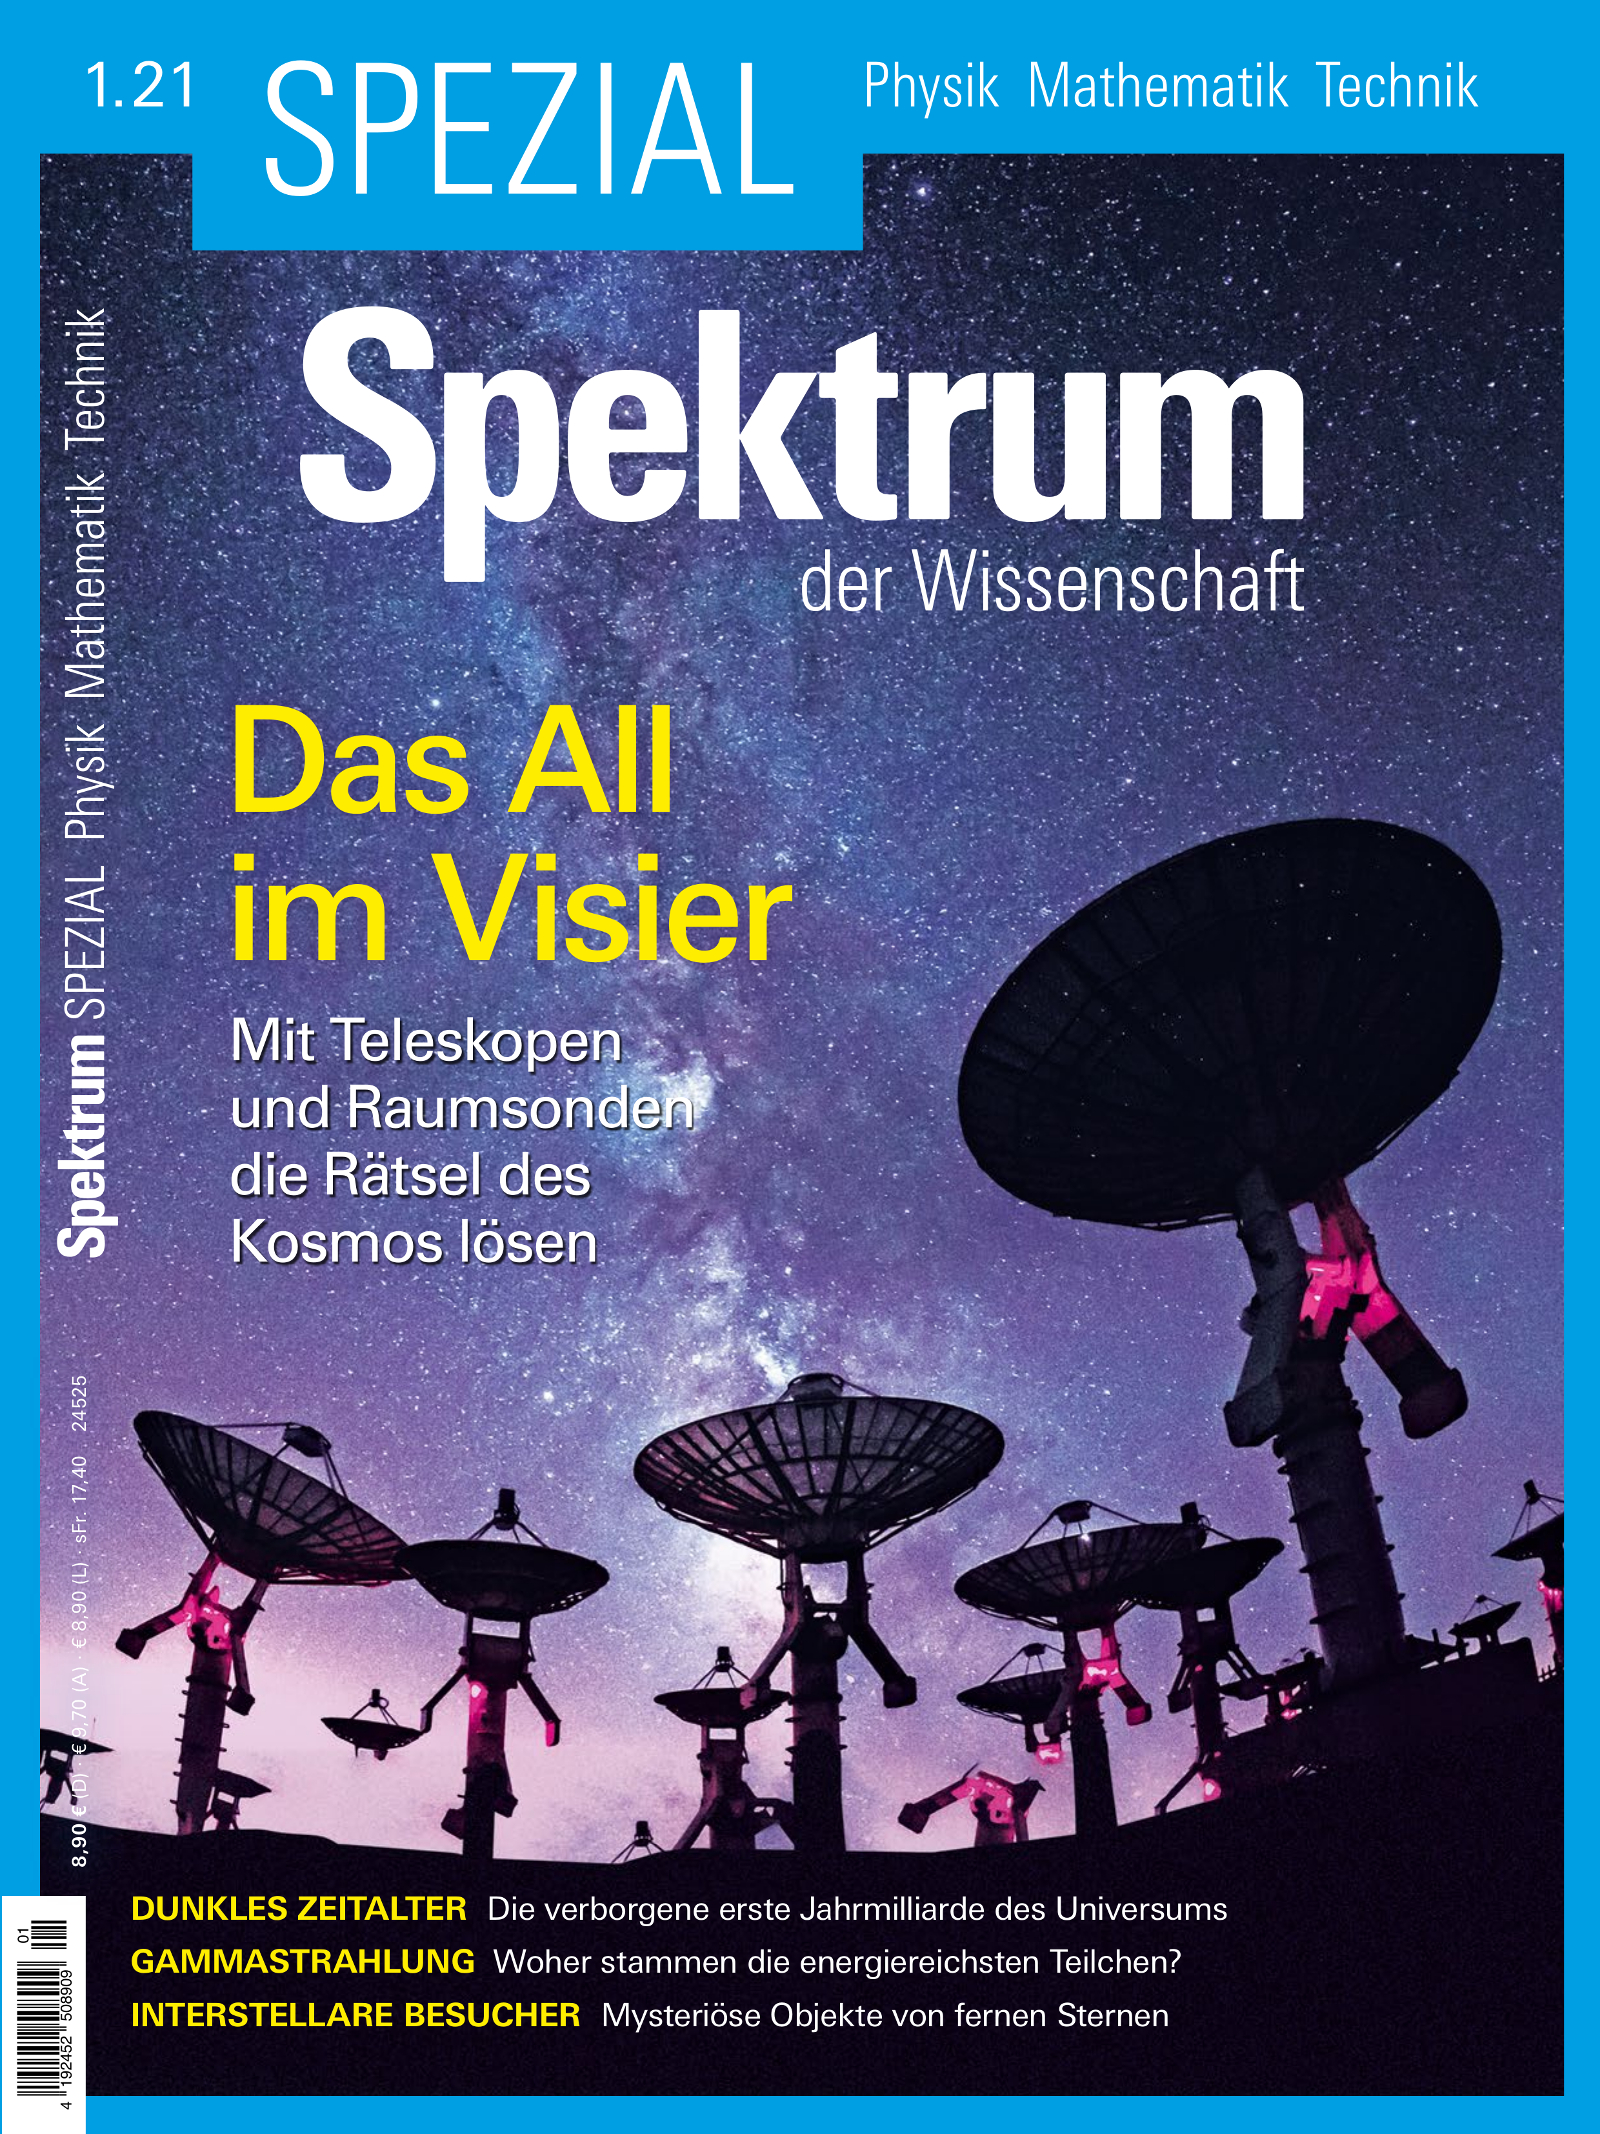 Spektrum Spezial Physik - Mathematik - Technik 1/2021 Cover